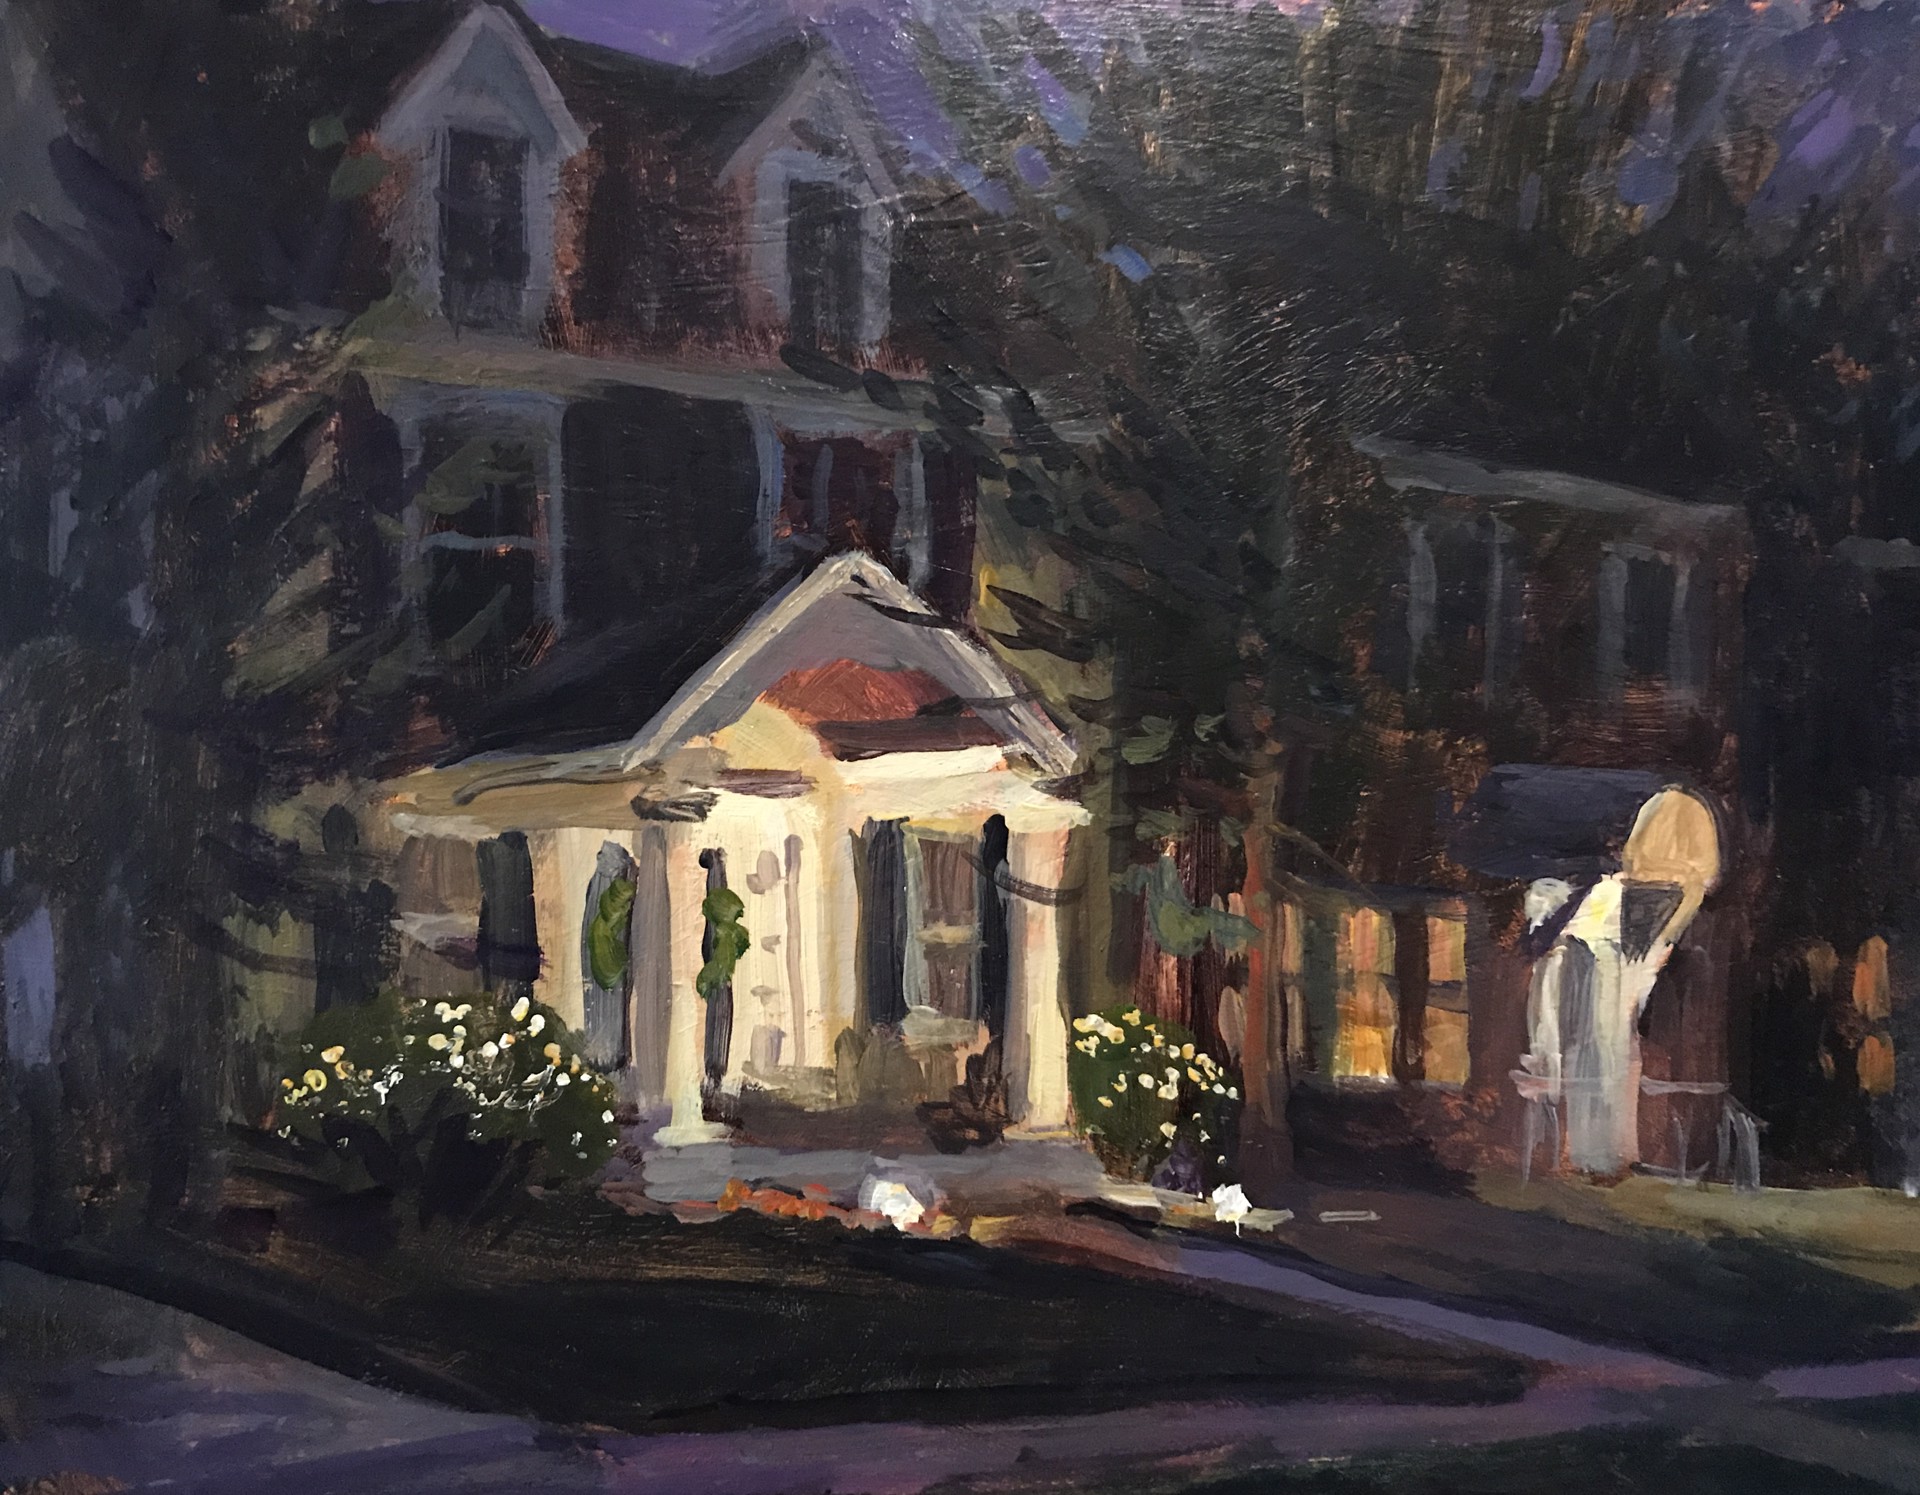 "Welcome Home" Original acrylic painting by Joe Gyurcsak